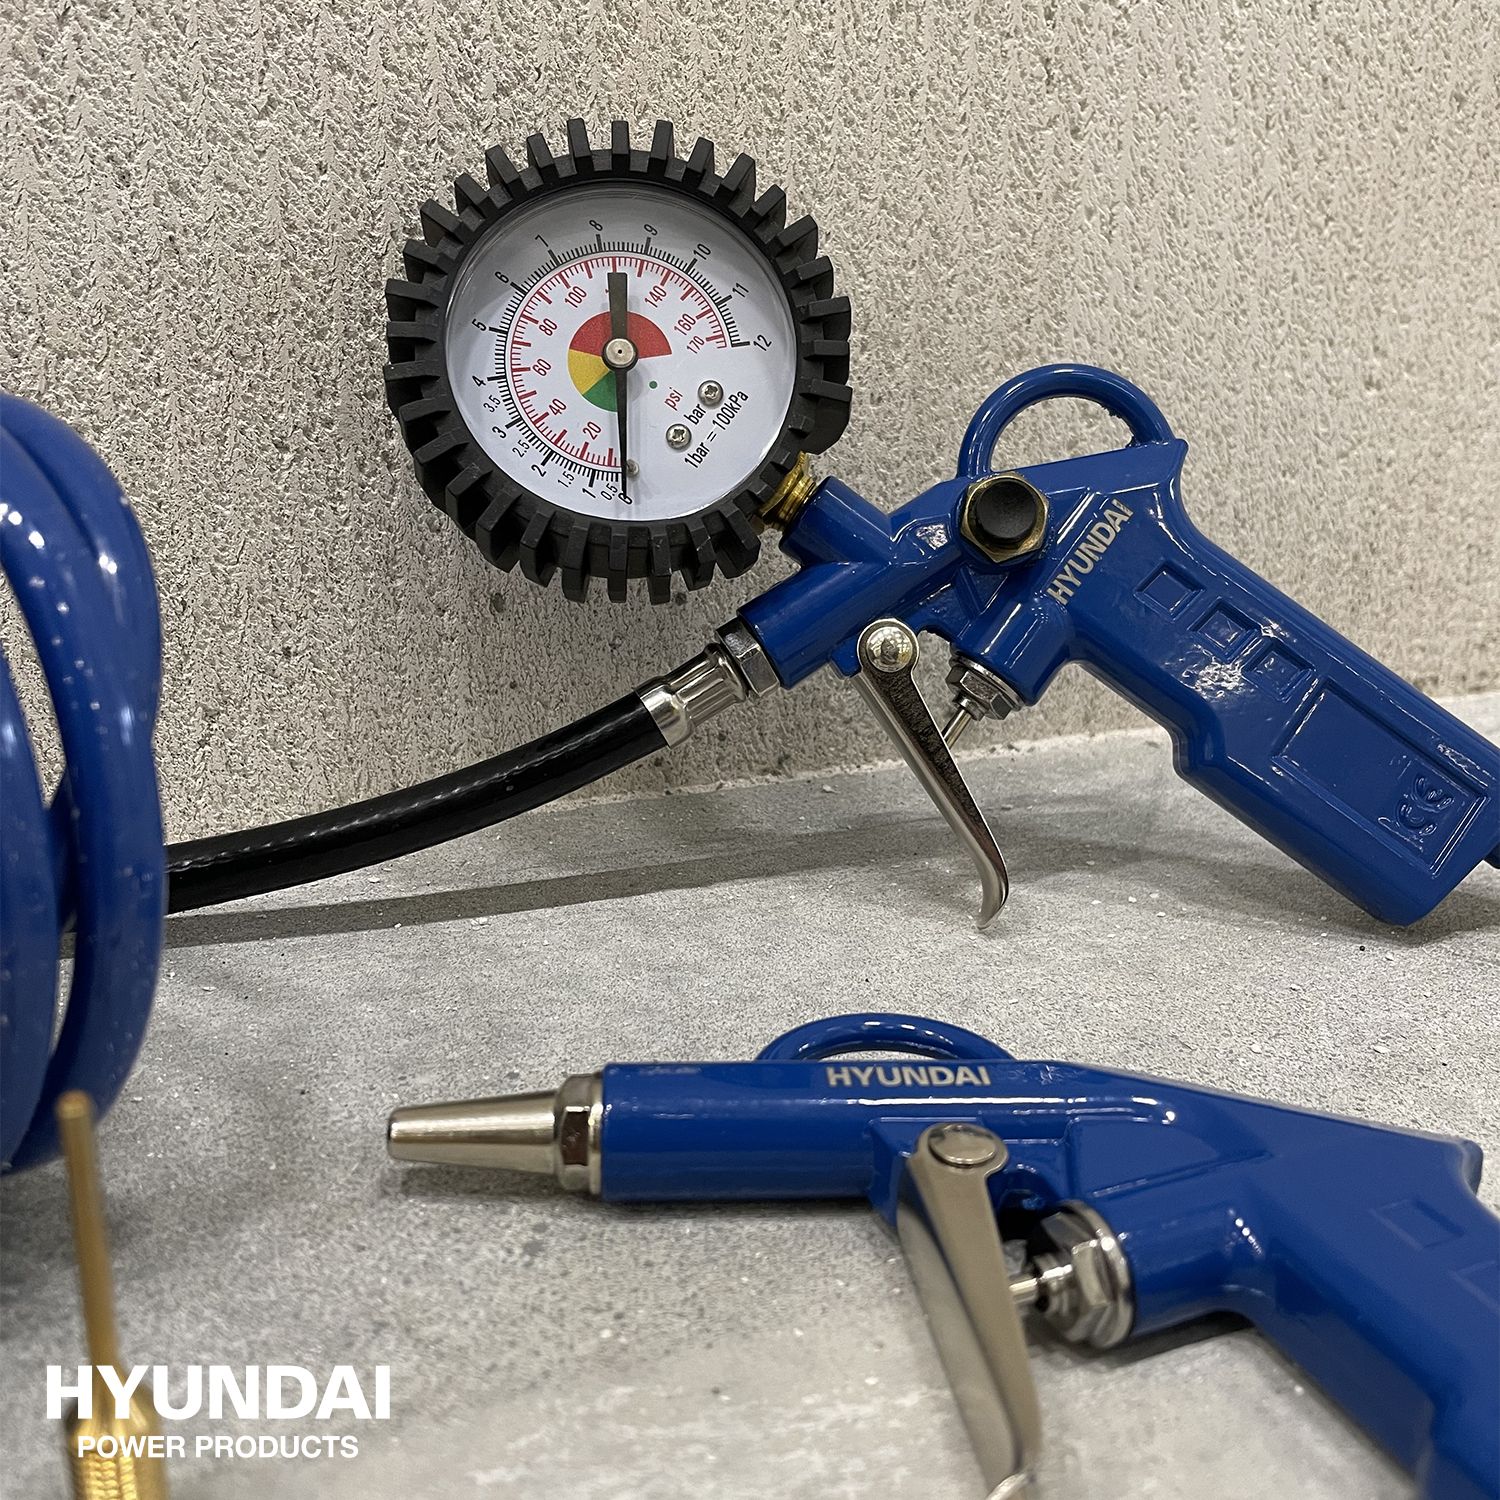 Hyundai compressoraccessoires 6x